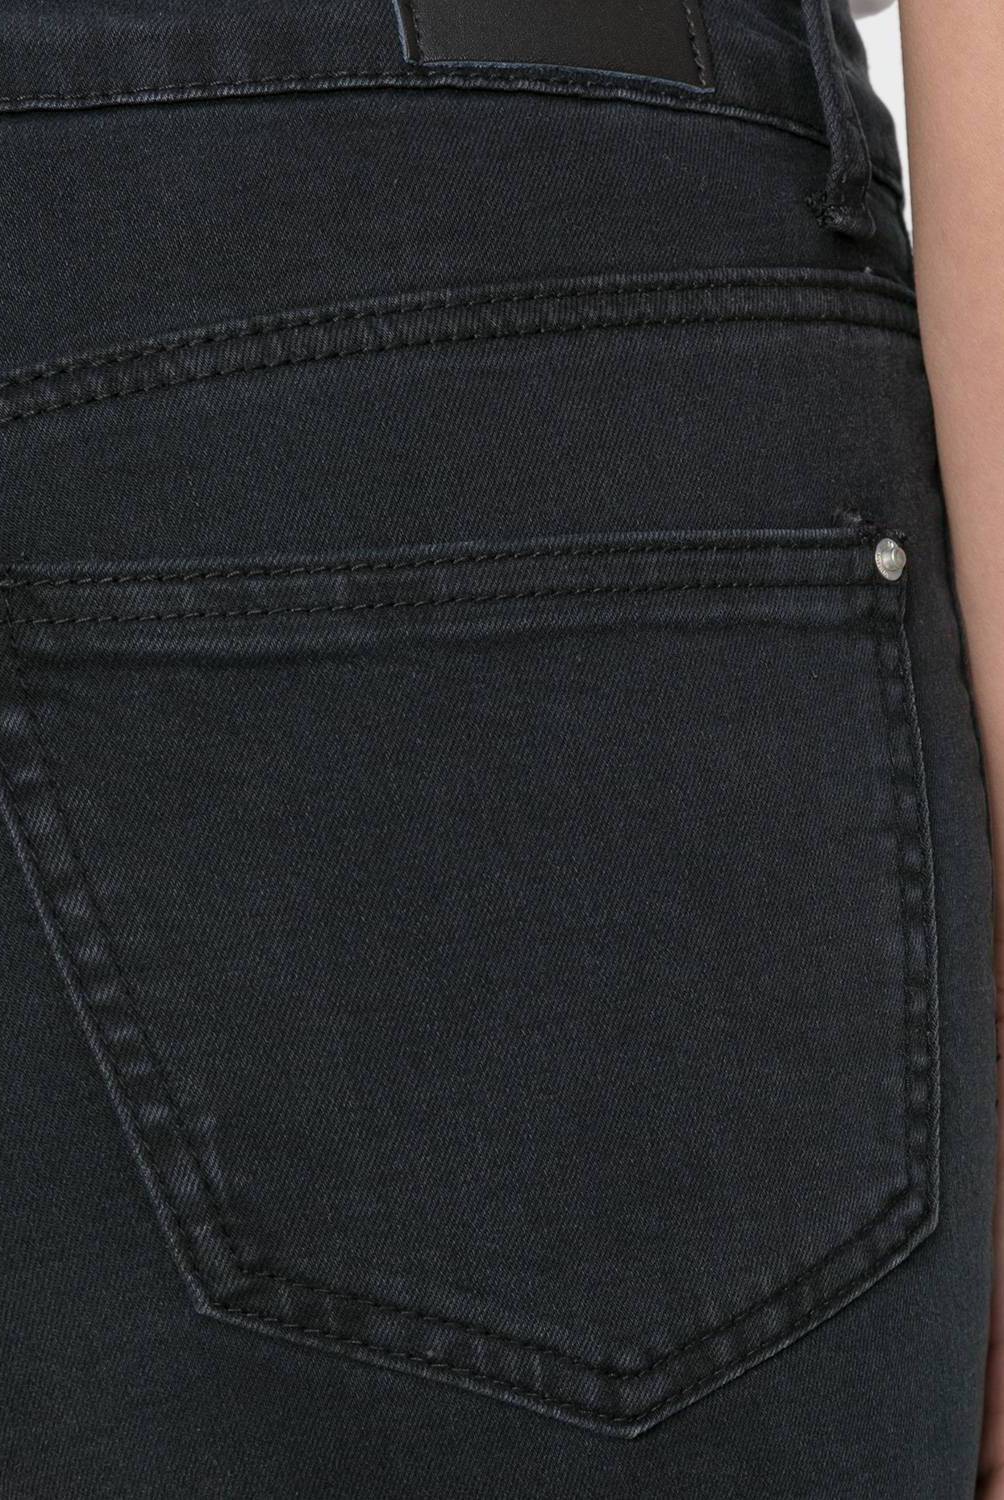 Pantalon Mezclilla Strech Mujer Jeans Super Comodos